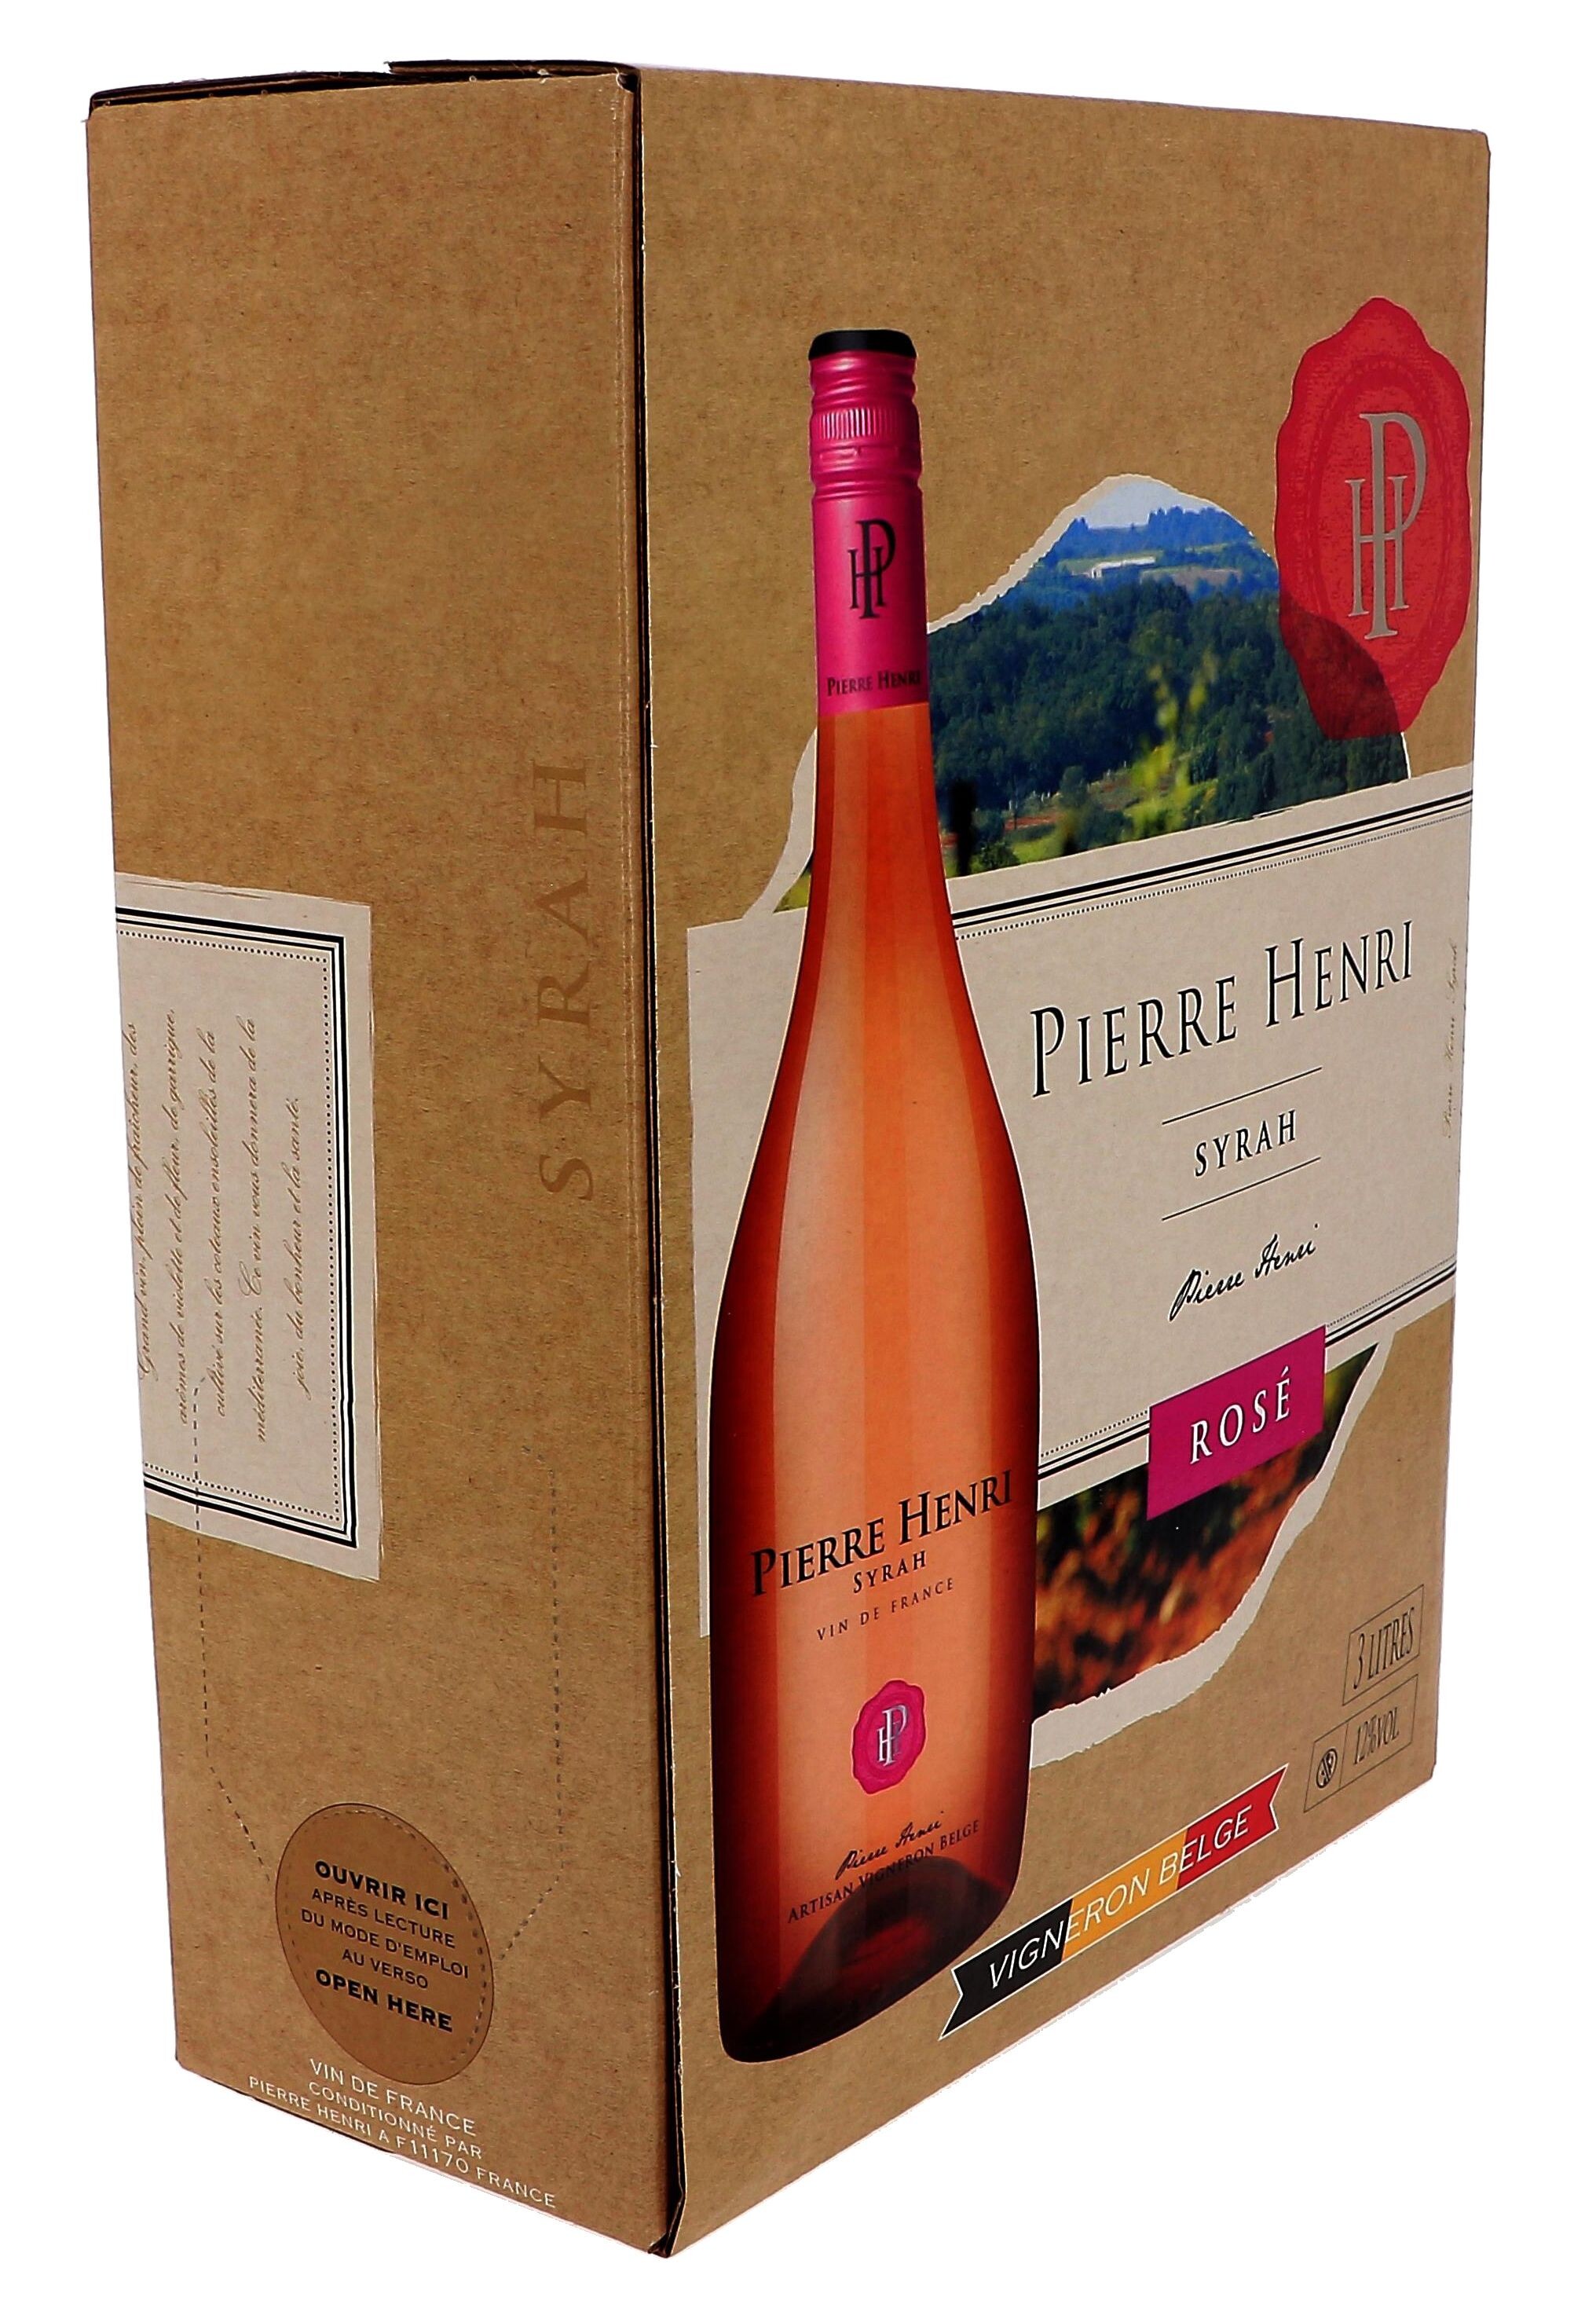 Syrah Wine Rosé Pierre Henri 3L Bag in Box Vin de France 